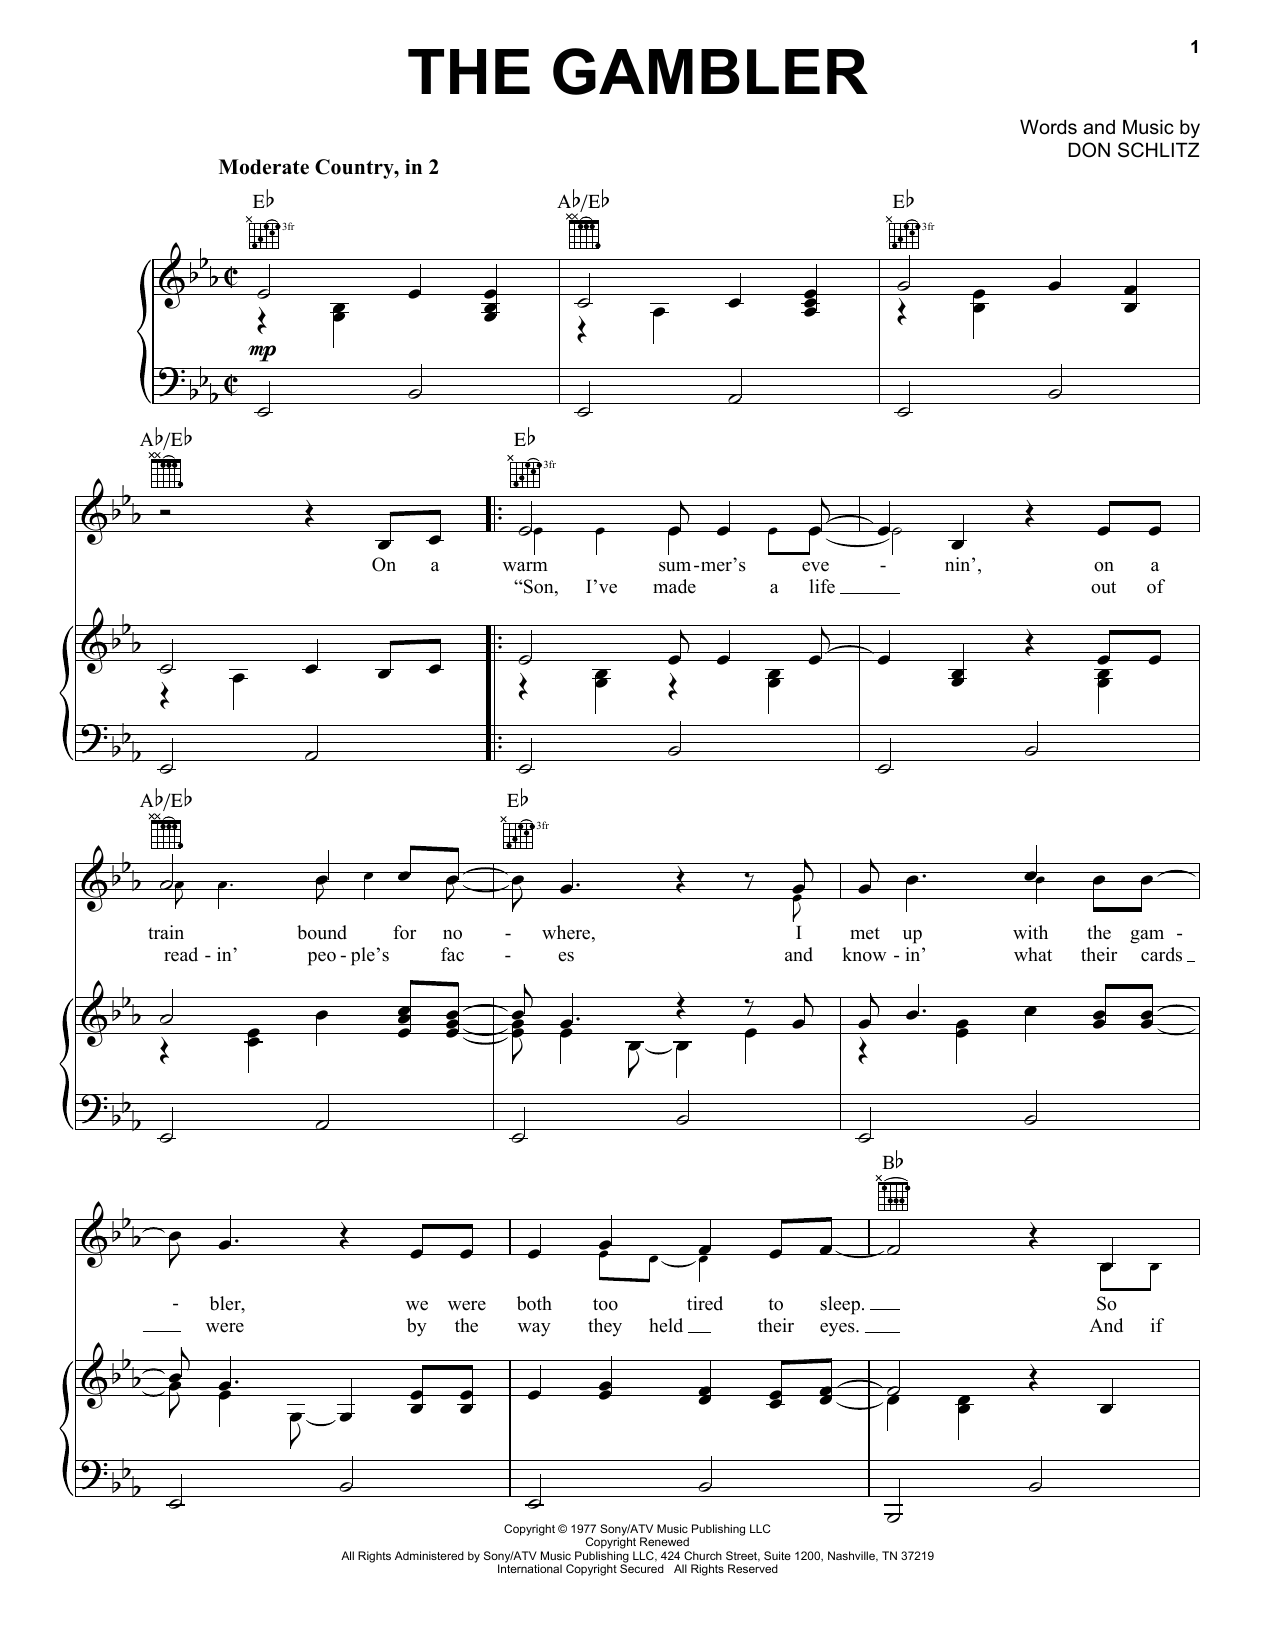 Kenny Rogers The Gambler Sheet Music Notes & Chords for Banjo Tab - Download or Print PDF